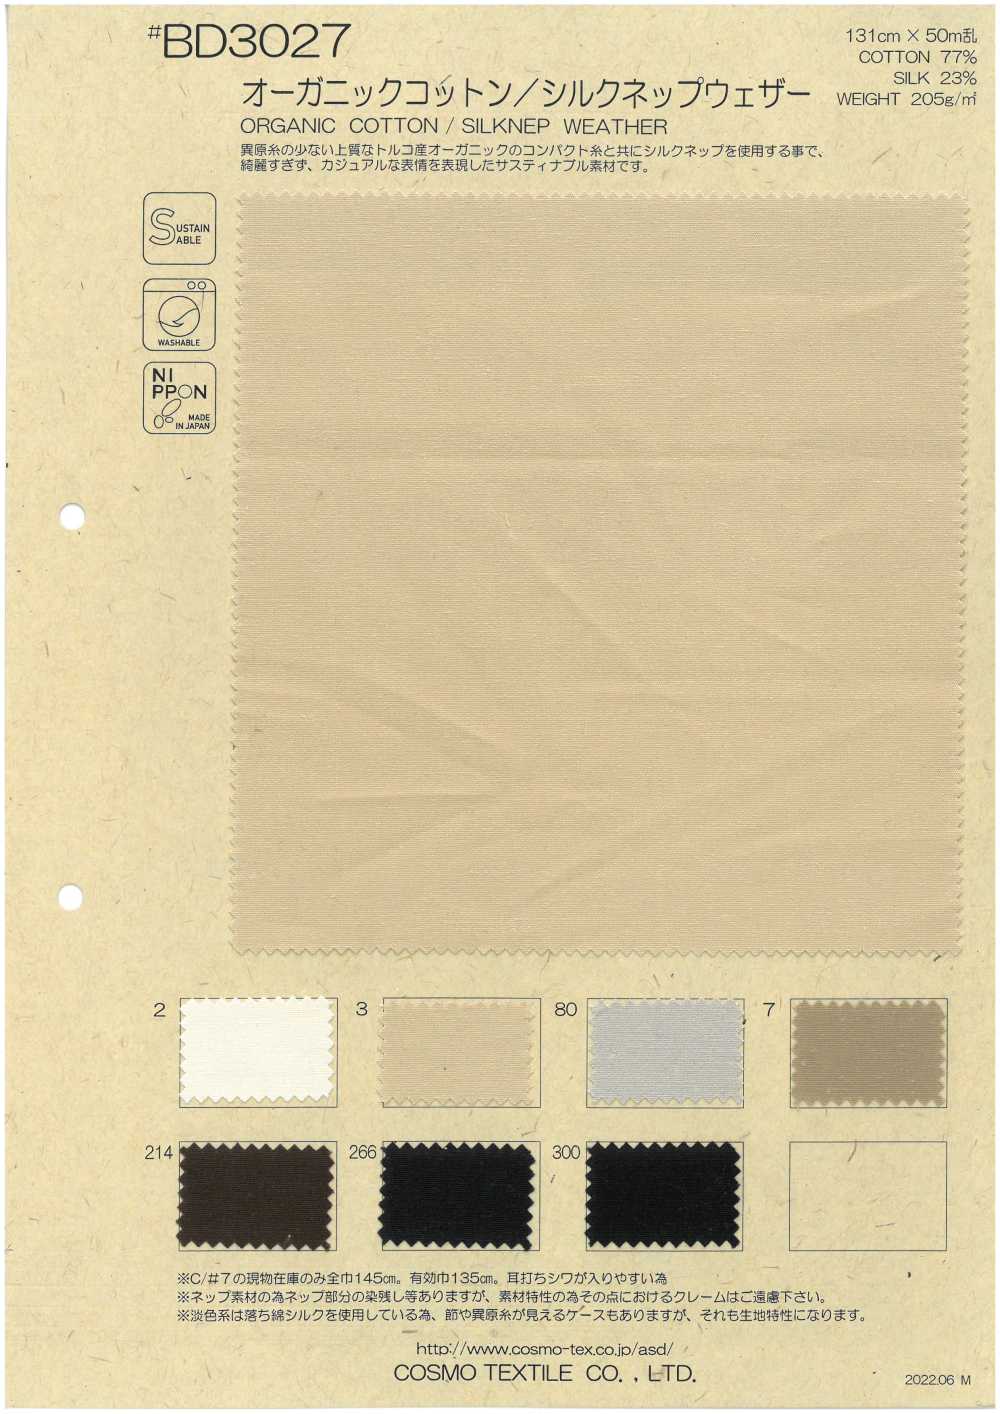 BD3027 Tela Impermeable De Algodón Orgánico/seda Nep[Fabrica Textil] COSMO TEXTILE